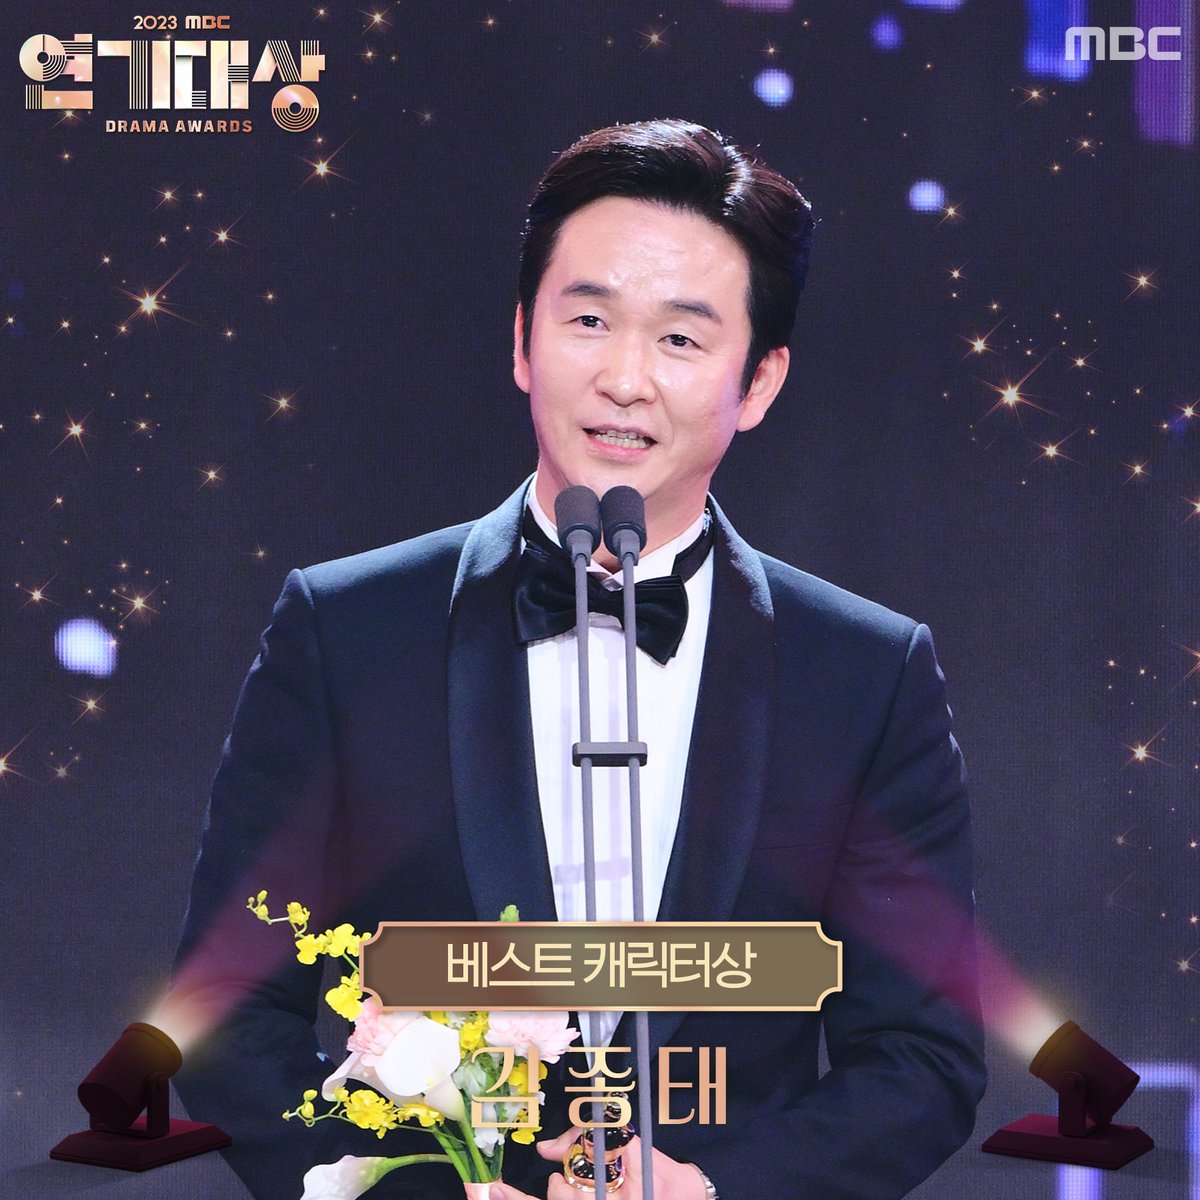 #2023MBCDramaAwards Best Character Award Winner: #KimJongTae (#MyDearest)

#연인 #김종태 #2023MBC연기대상